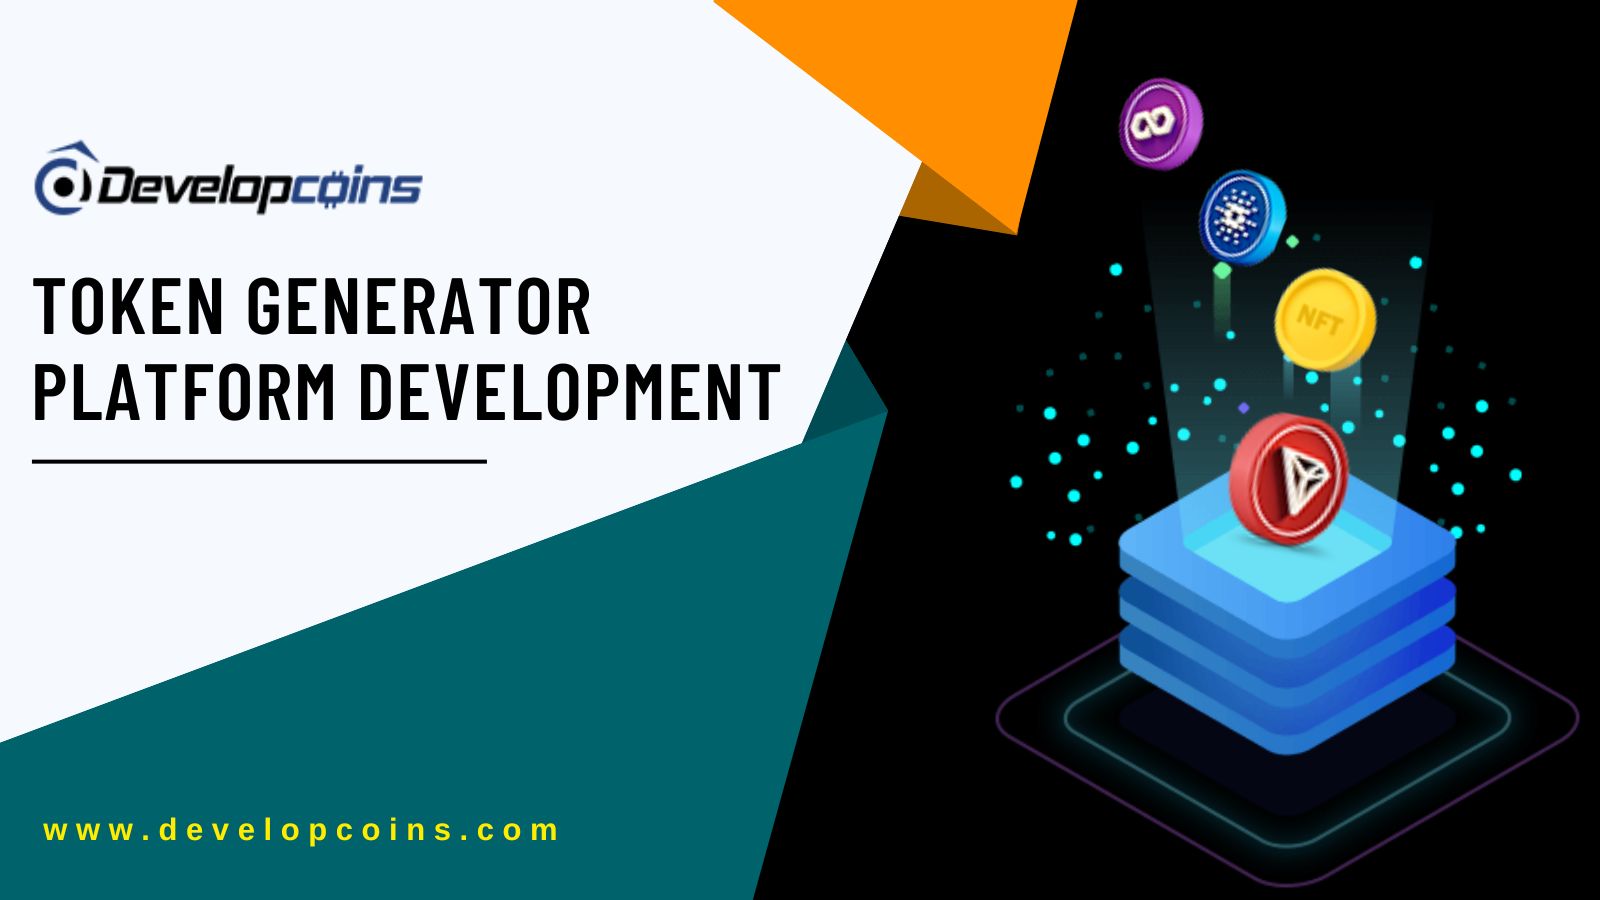 Token Generator Platform Development To Facilitate Simplified Token Creation